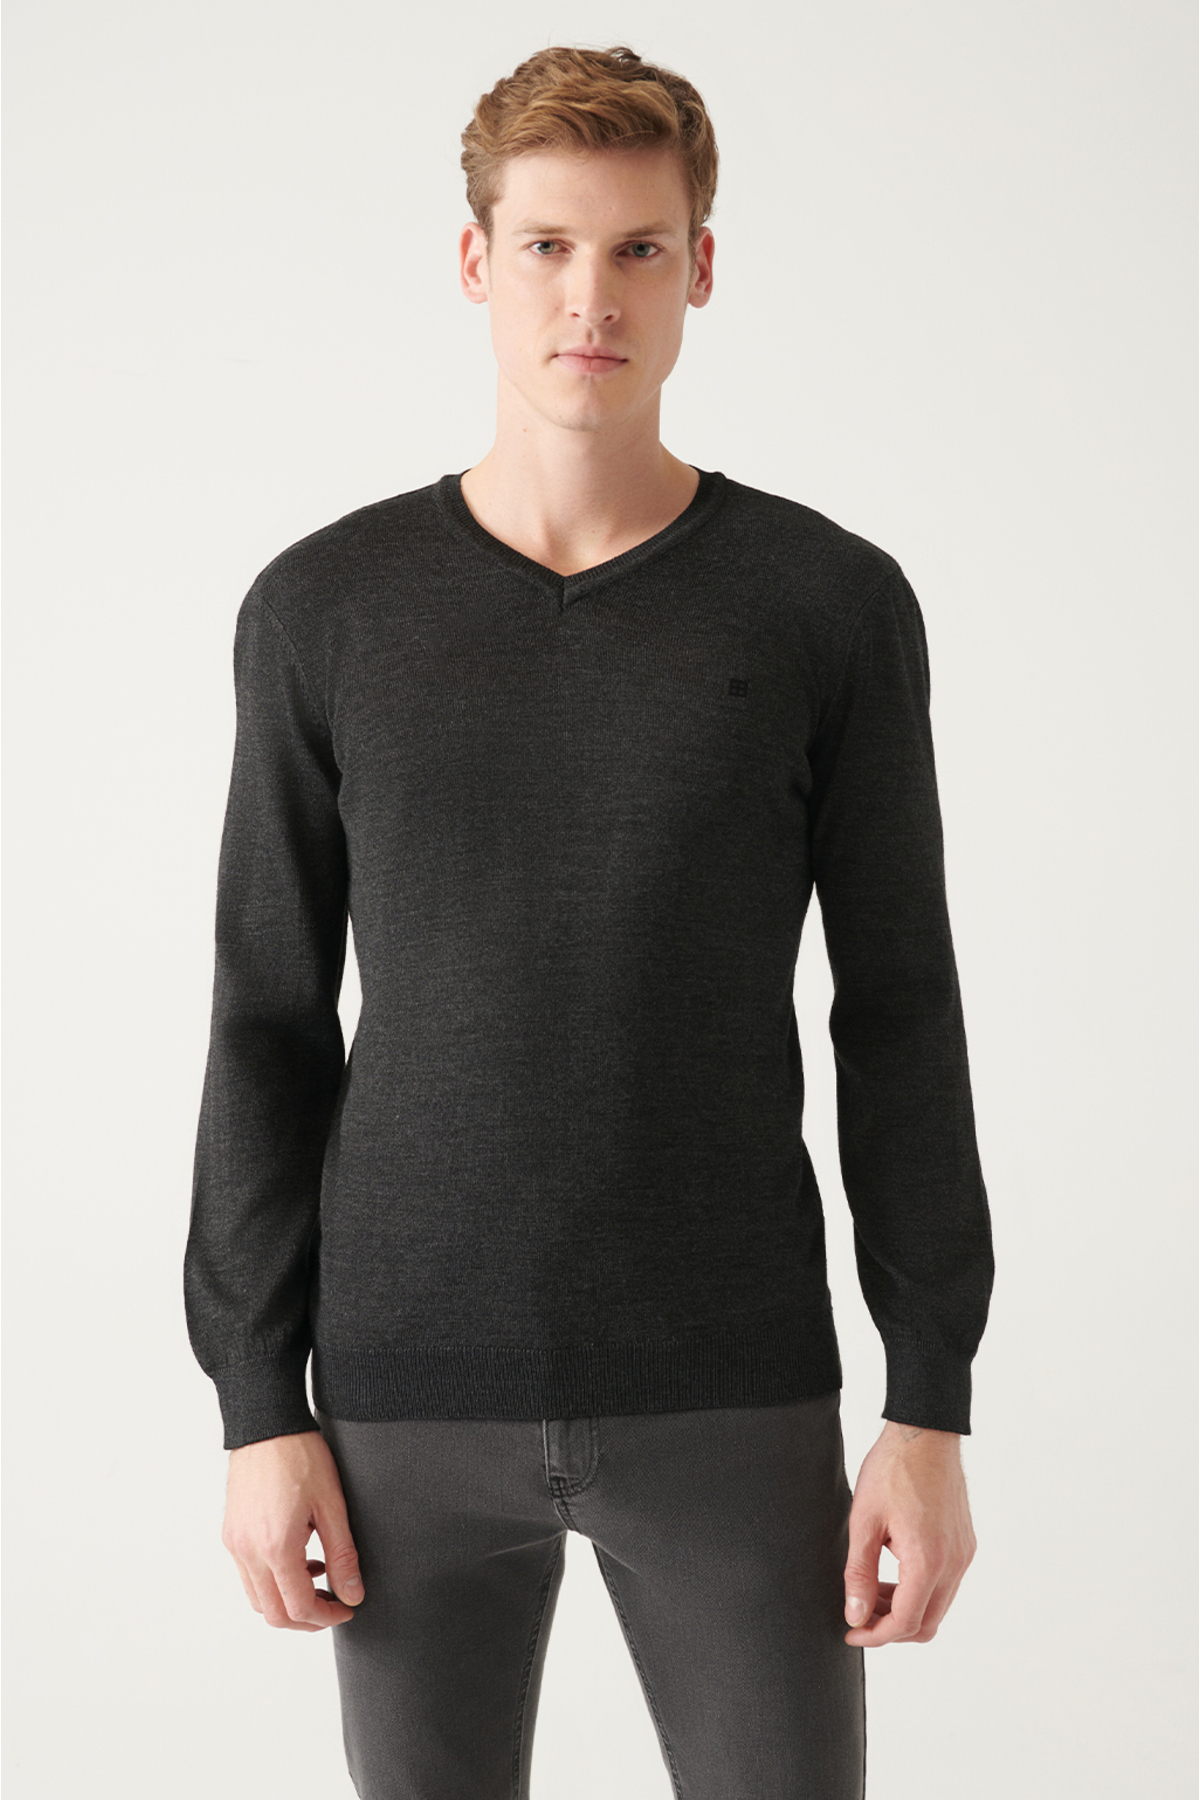 Avva Men's Anthracite V Neck Wool Blended Standard Fit Regular Cut Knitwear Sweater